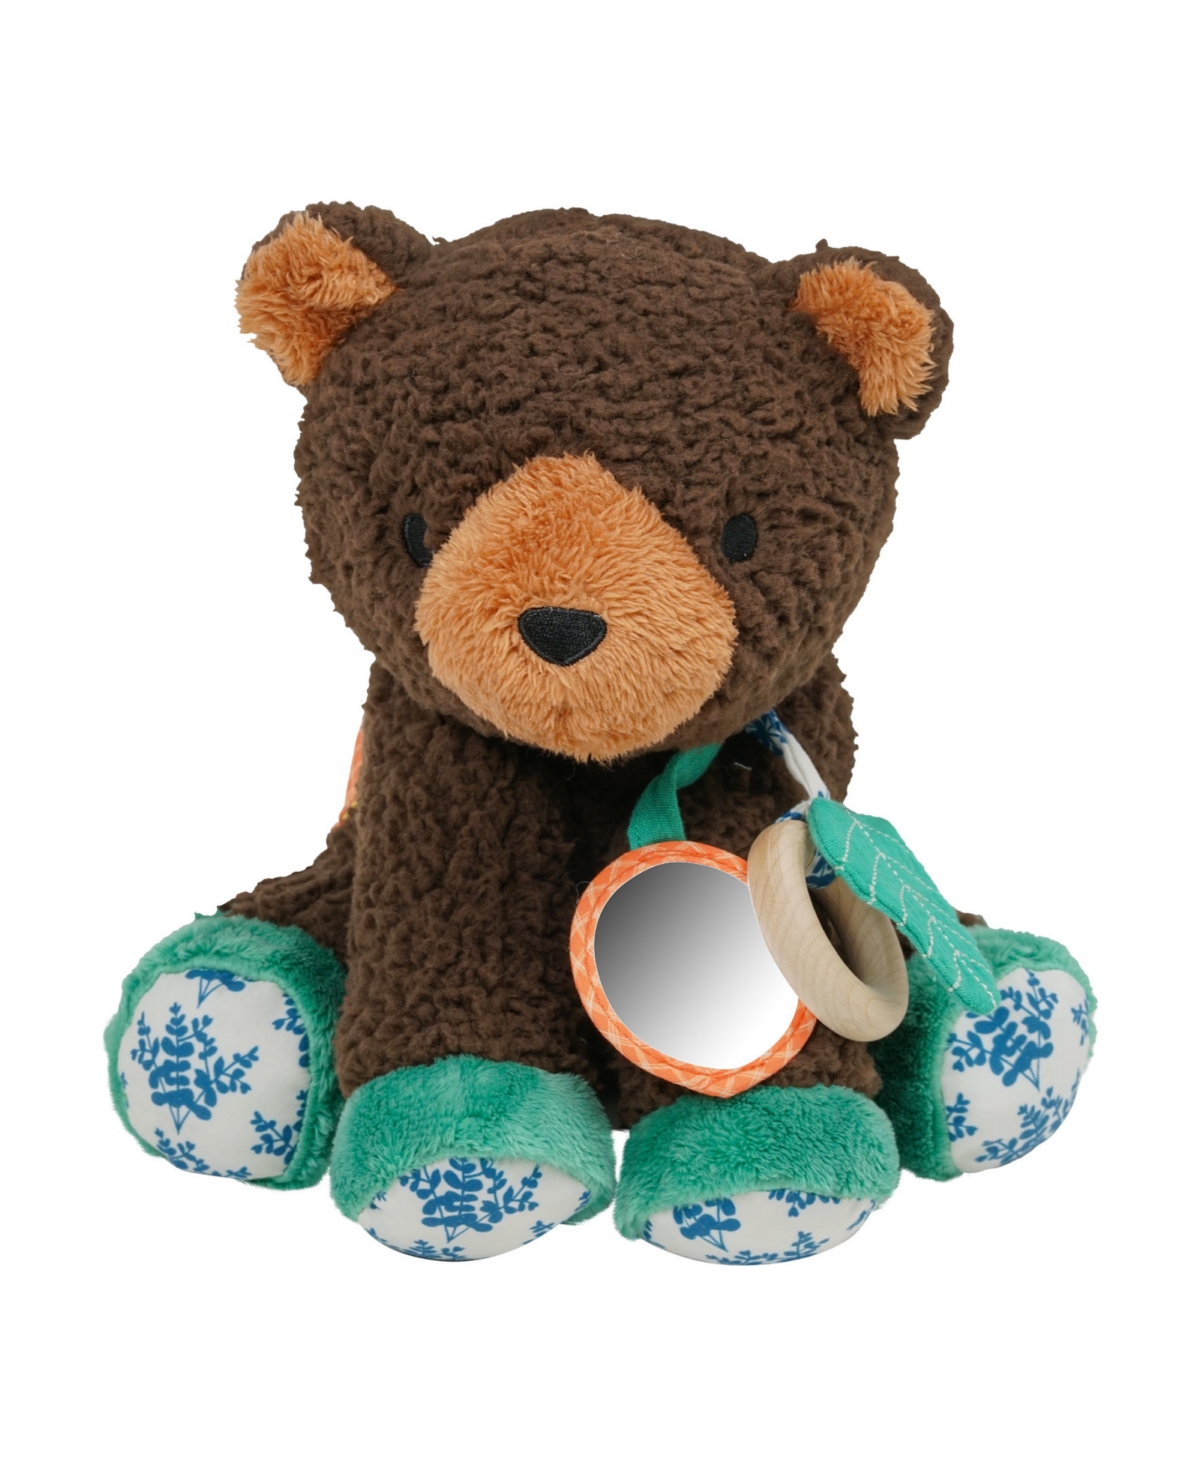 Manhattan Toy Company Kids' Wild Bear-y Plush Teddy Bear 8" Stuffed Animal Activity Toy In Multicolor